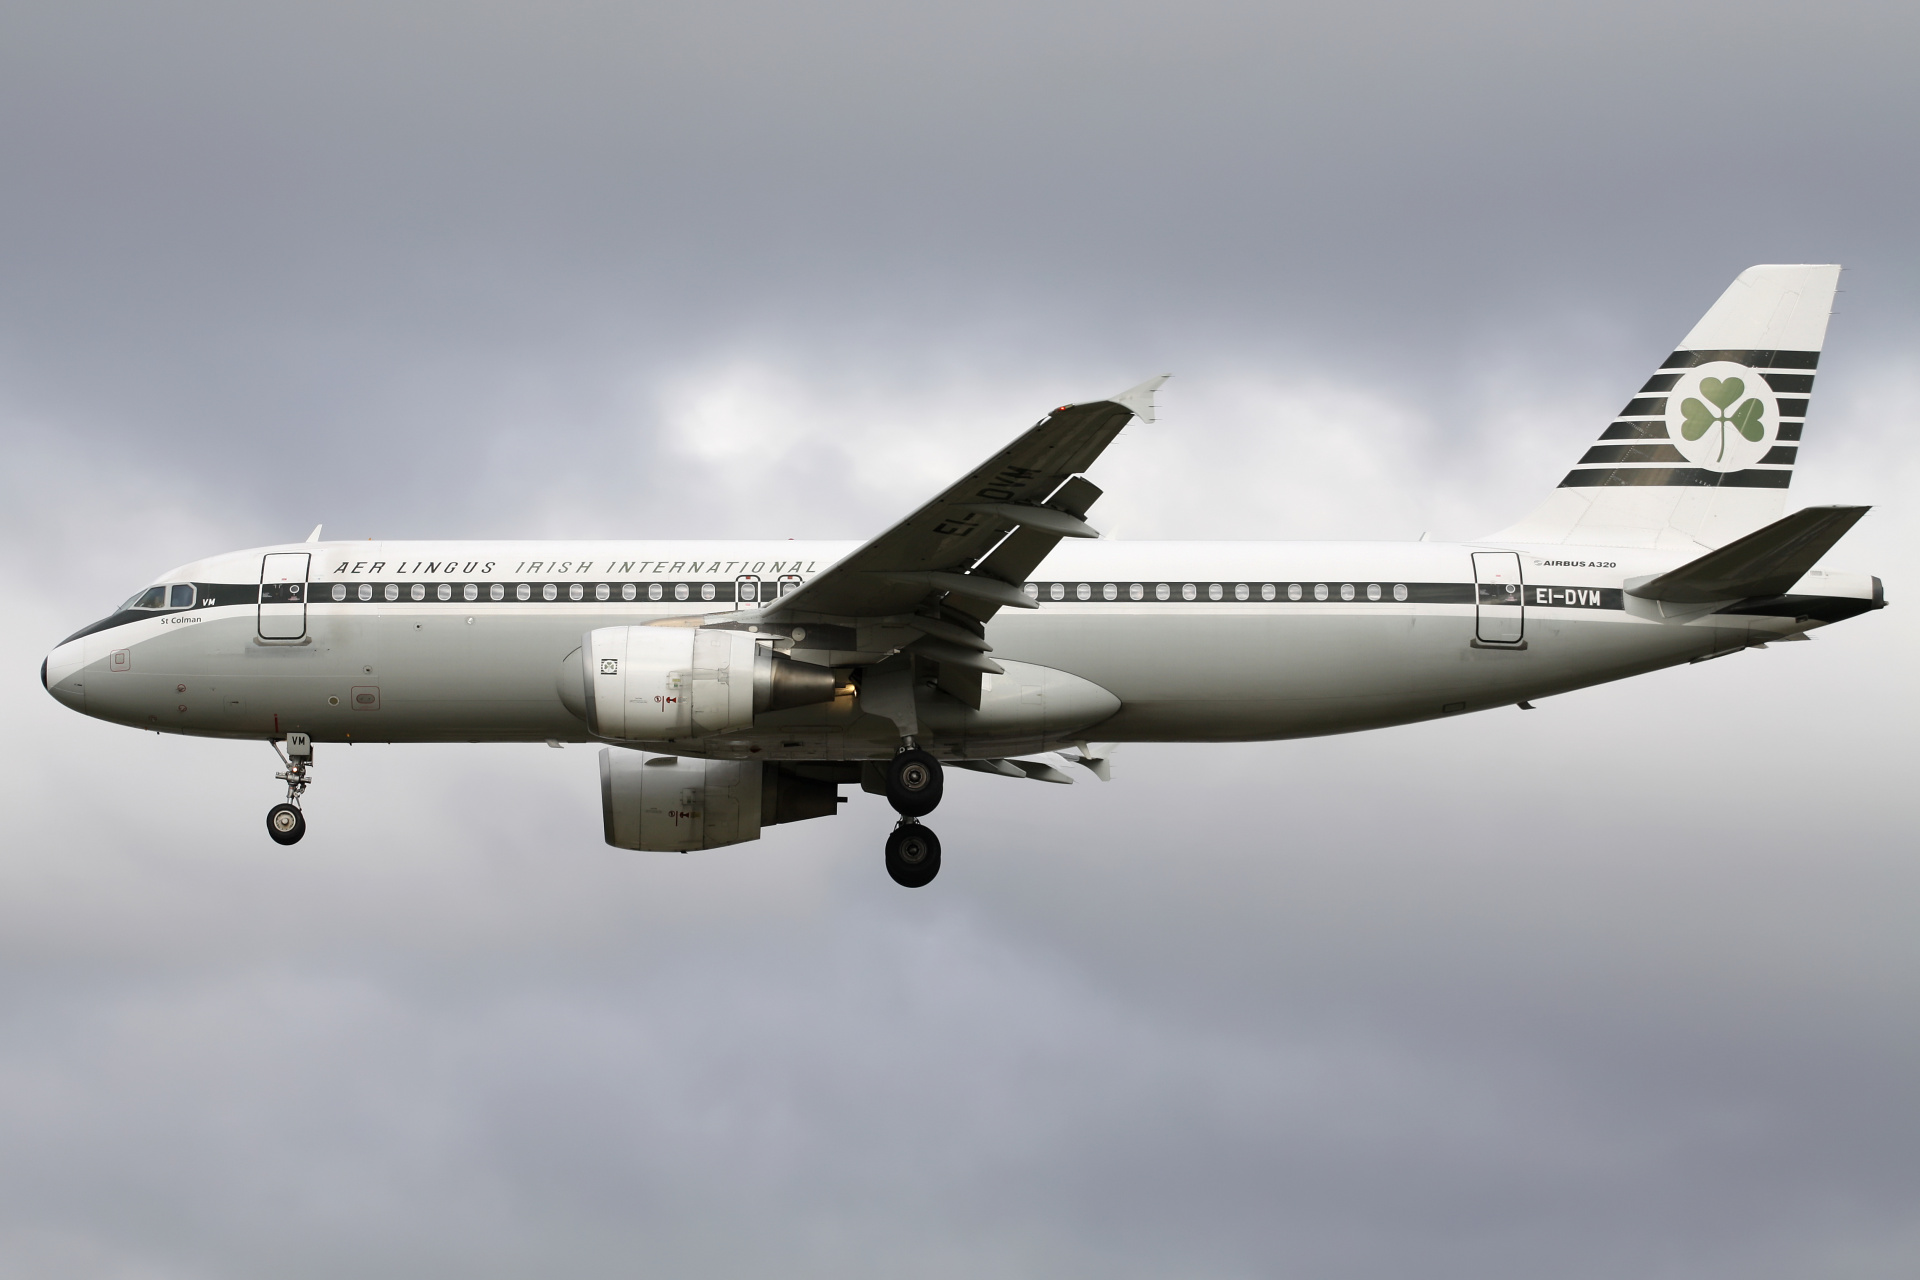 Airbus A320-200, EI-DVM, Aer Lingus (retro livery) (Aircraft » Heathrow spotting » various)